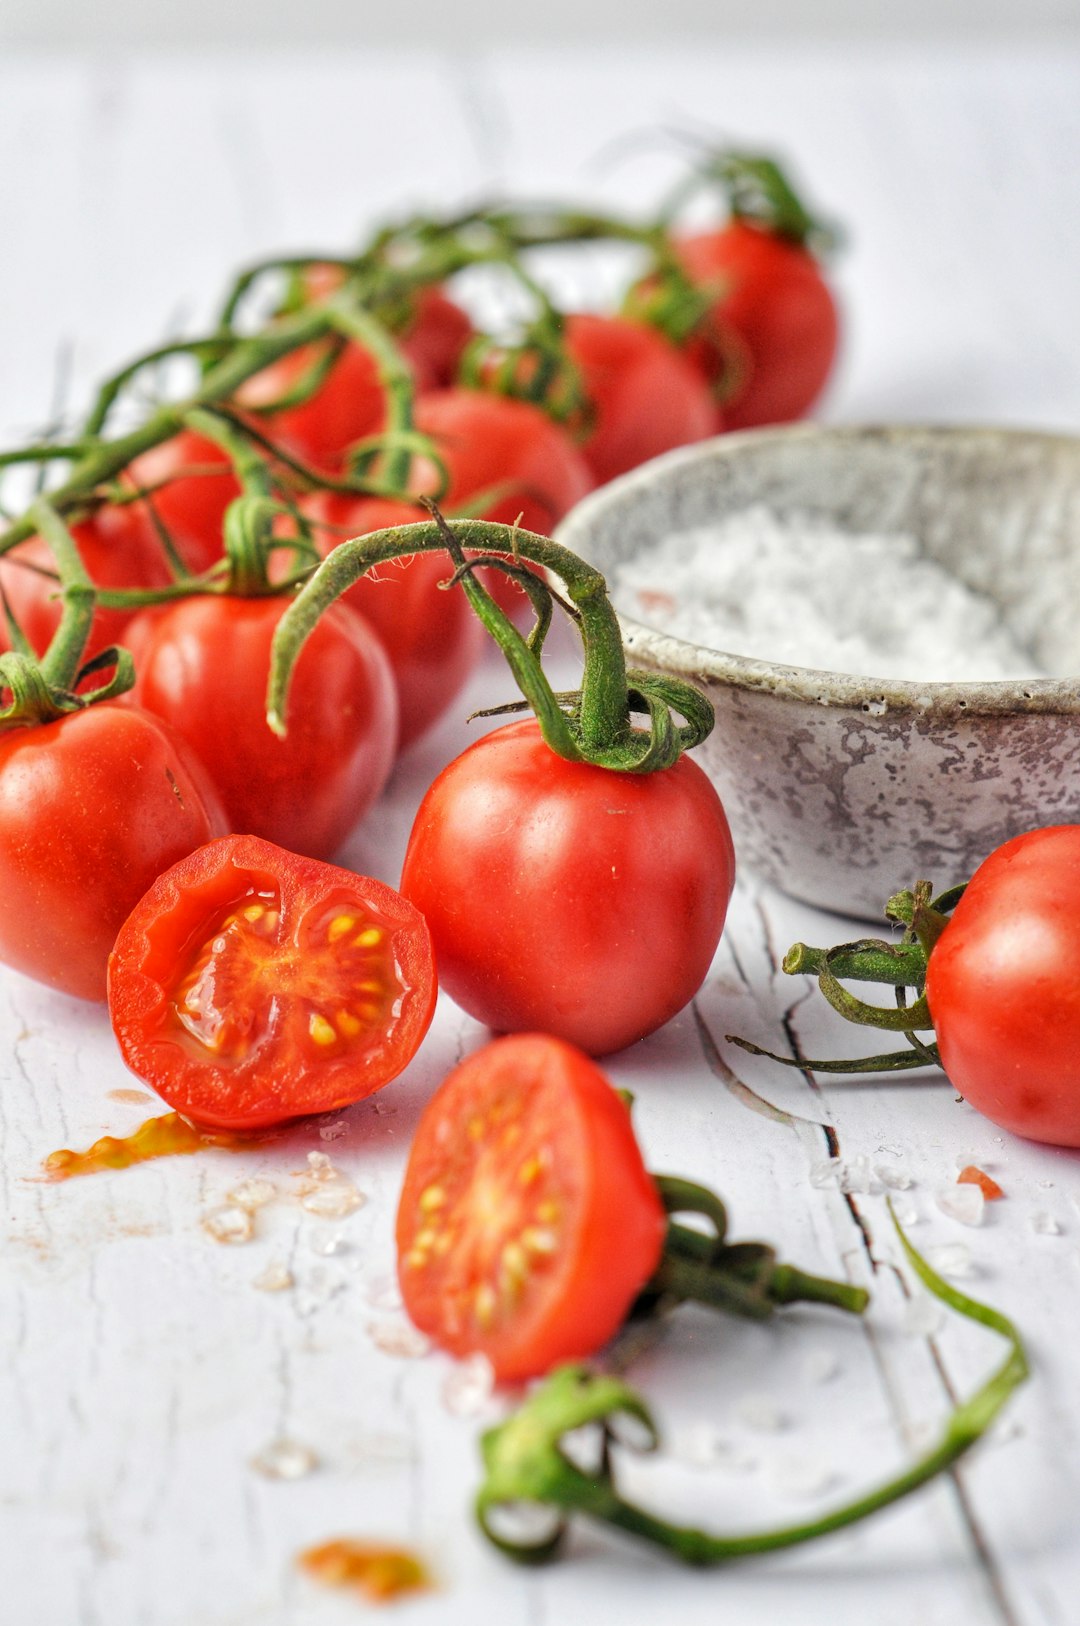 red tomato beside white ceramic bowl